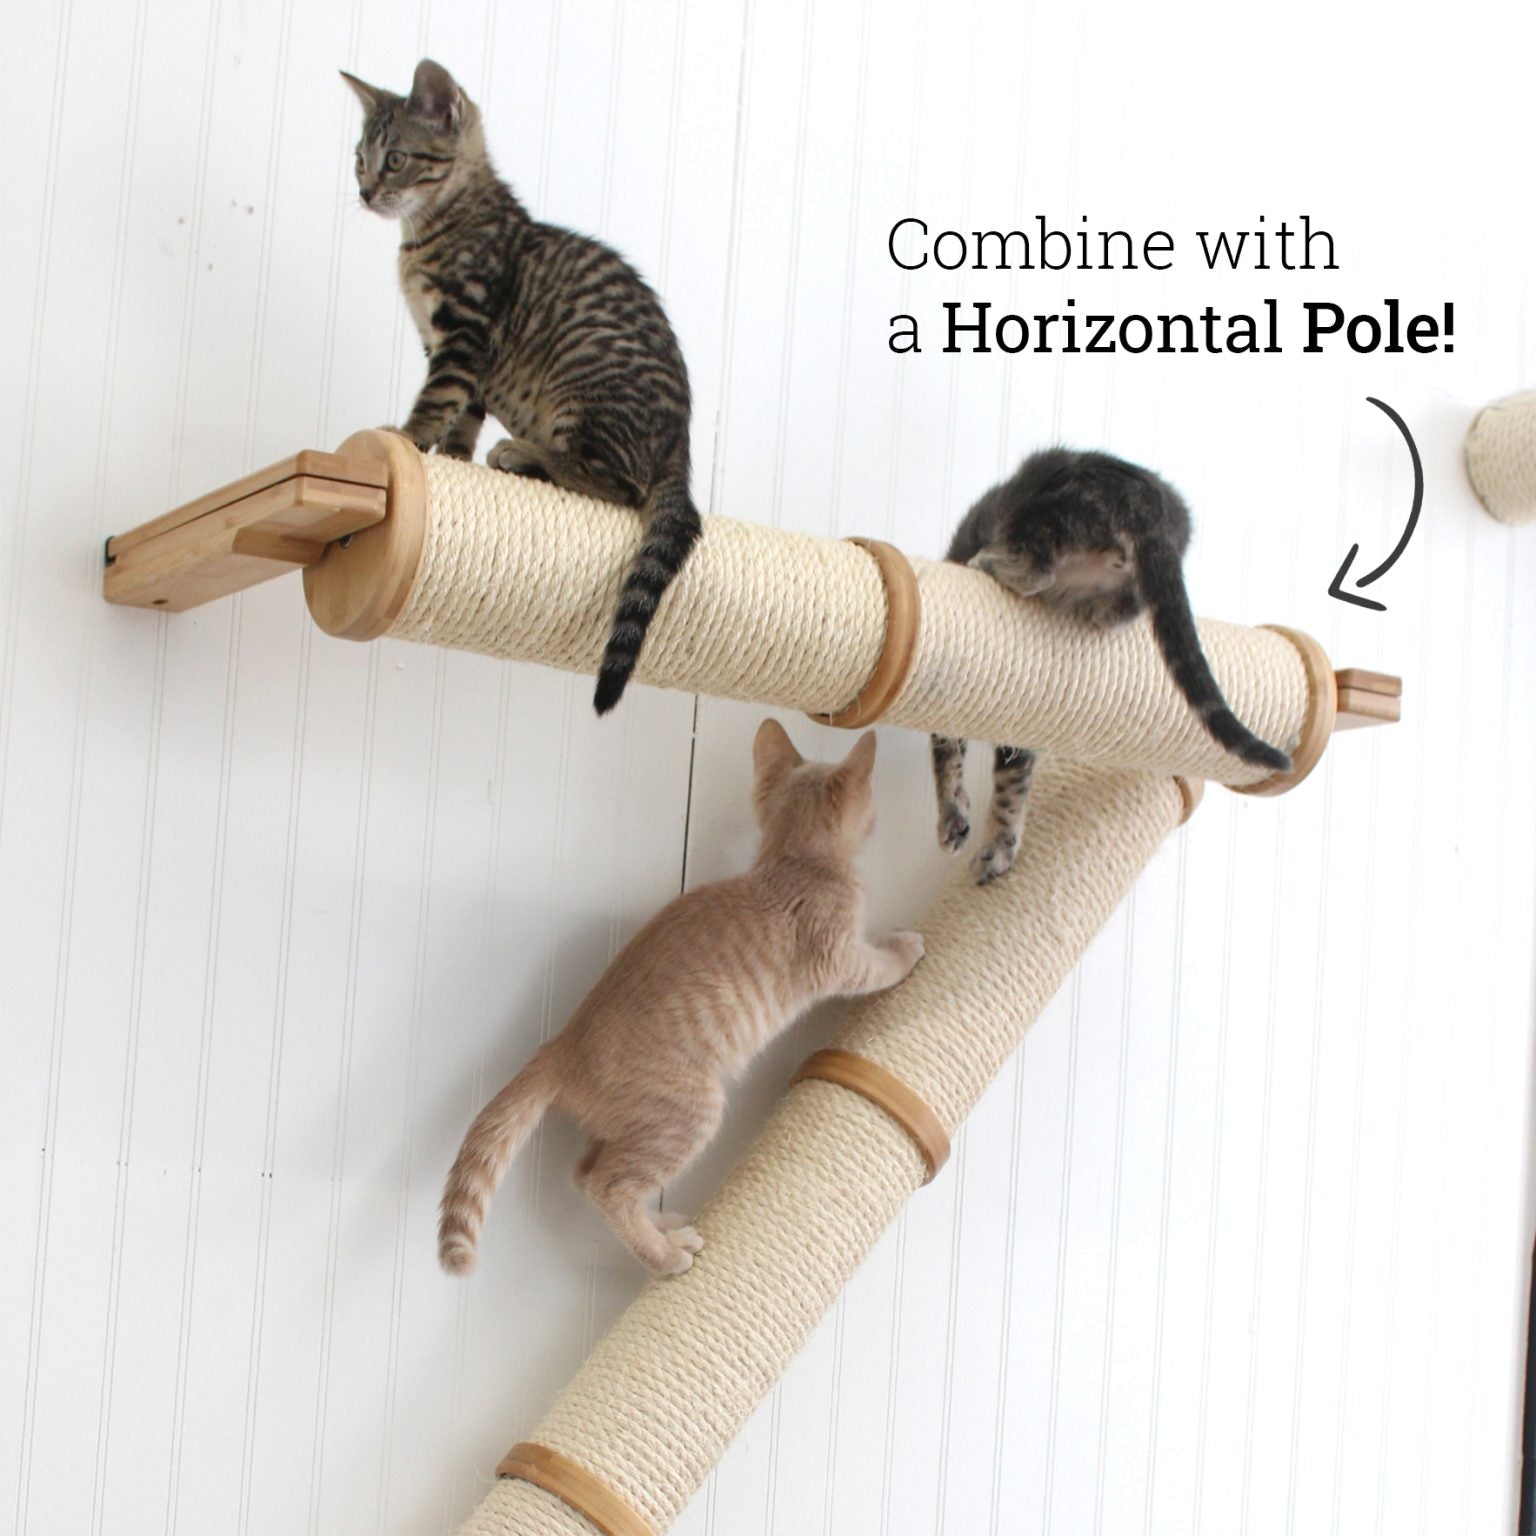 Combining a horizontal pole and an angled pole